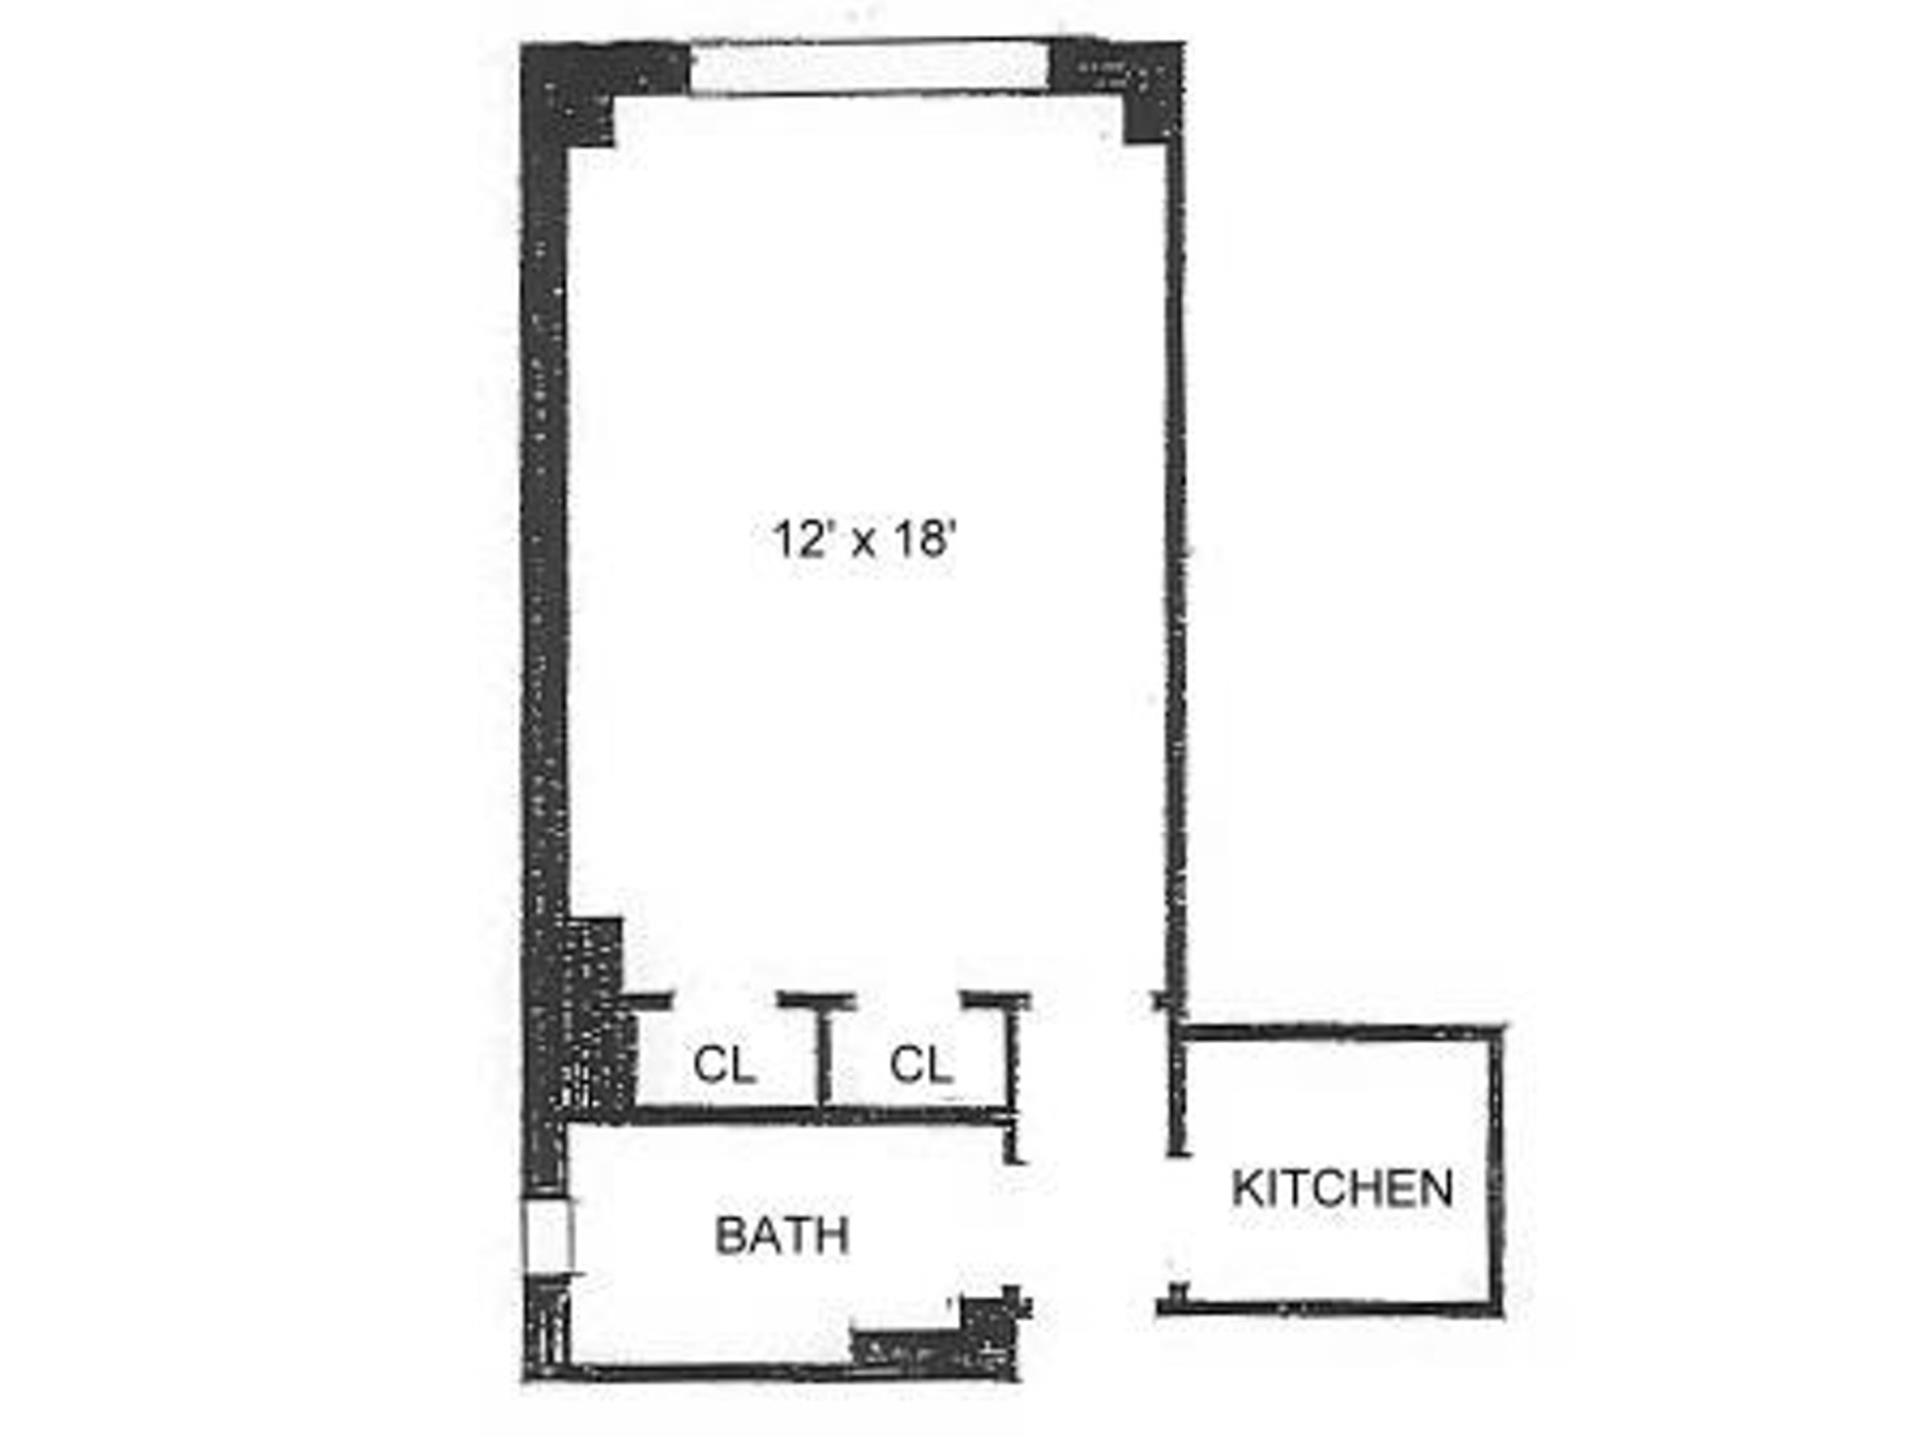 Floorplan for 235 West 102nd Street, 5U